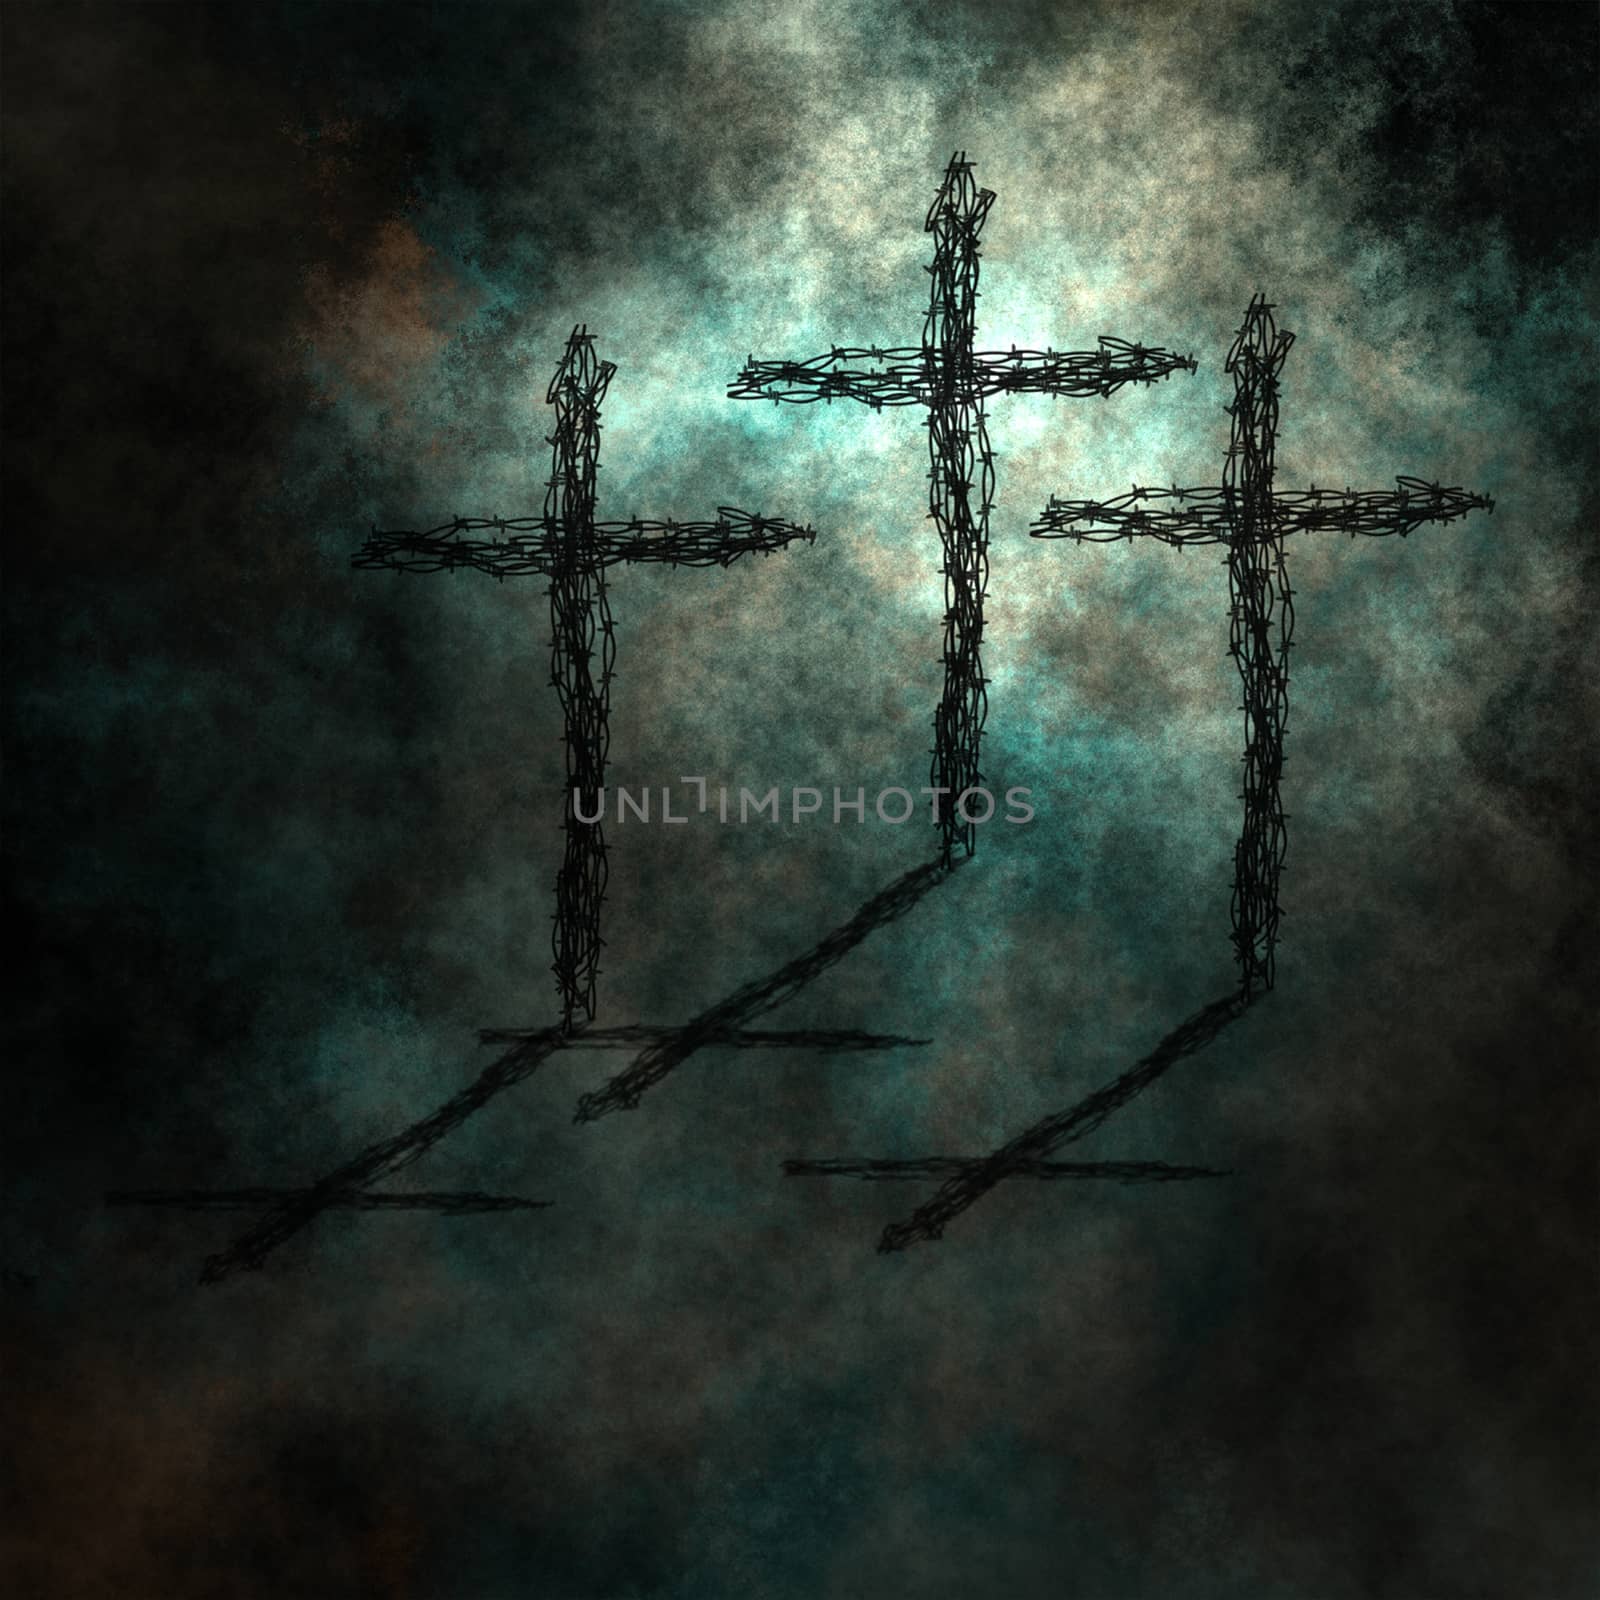 Three Crosses made of barbed wire in dark scene